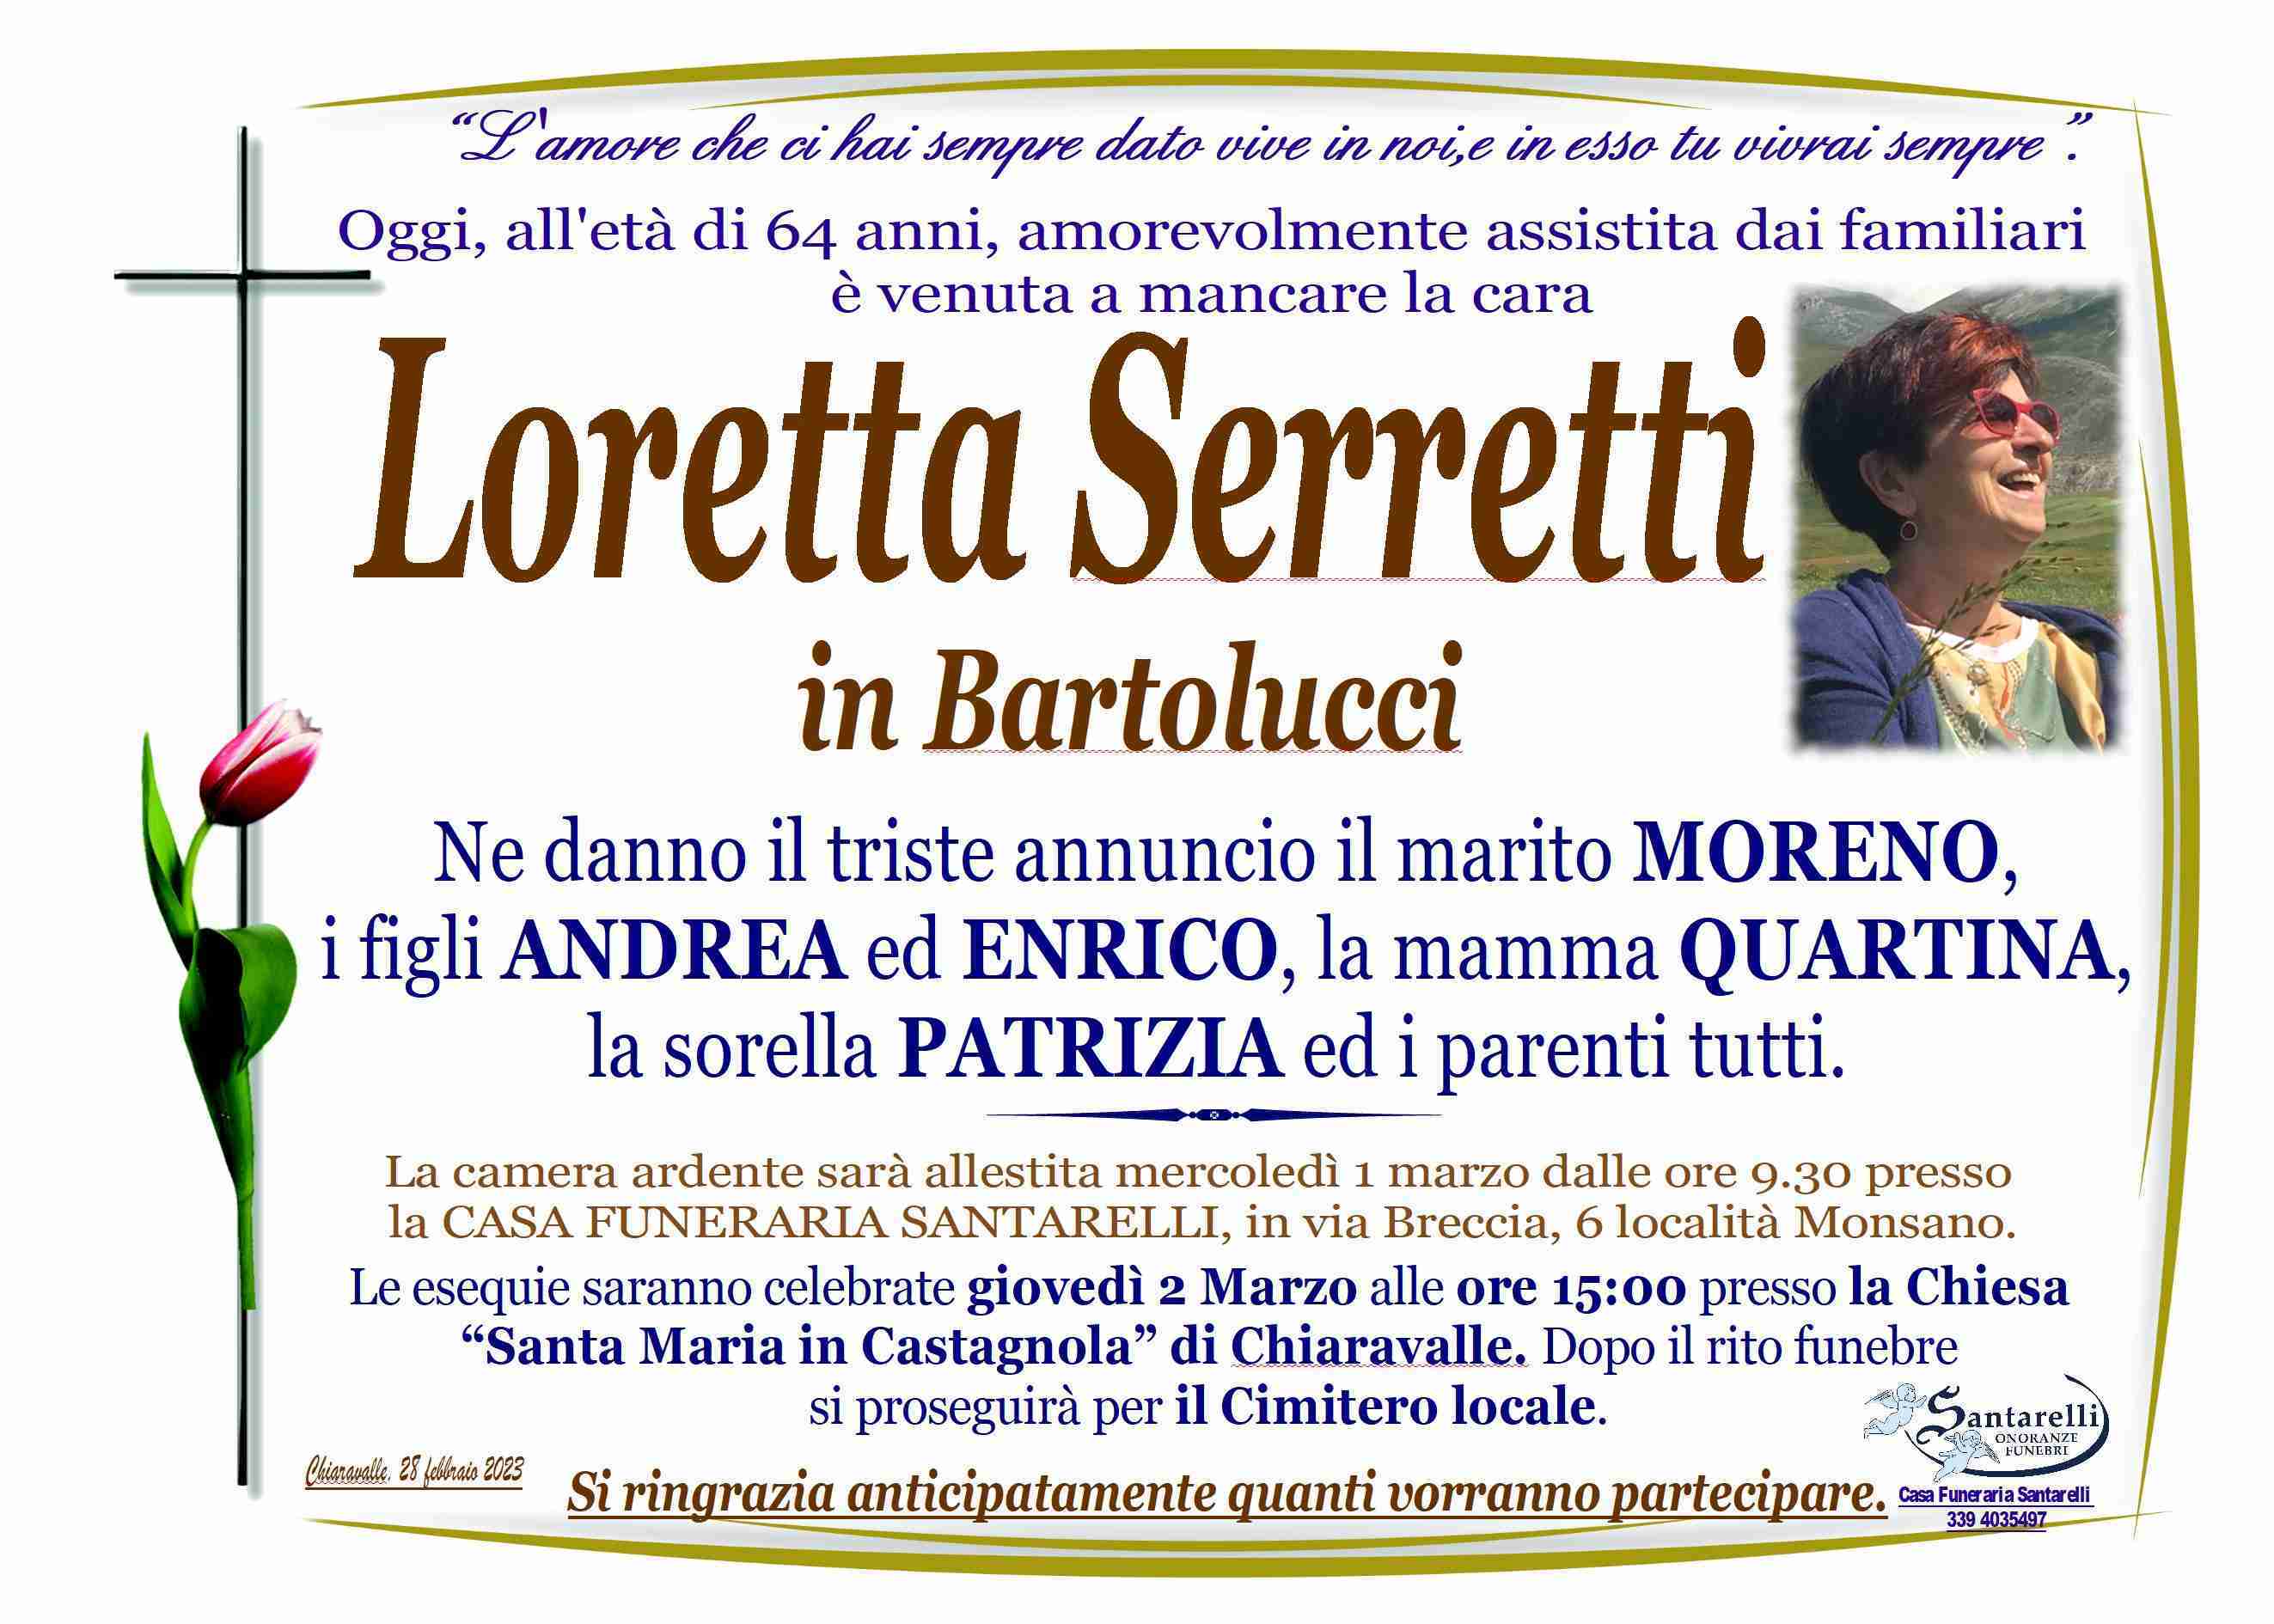 Loretta Serretti